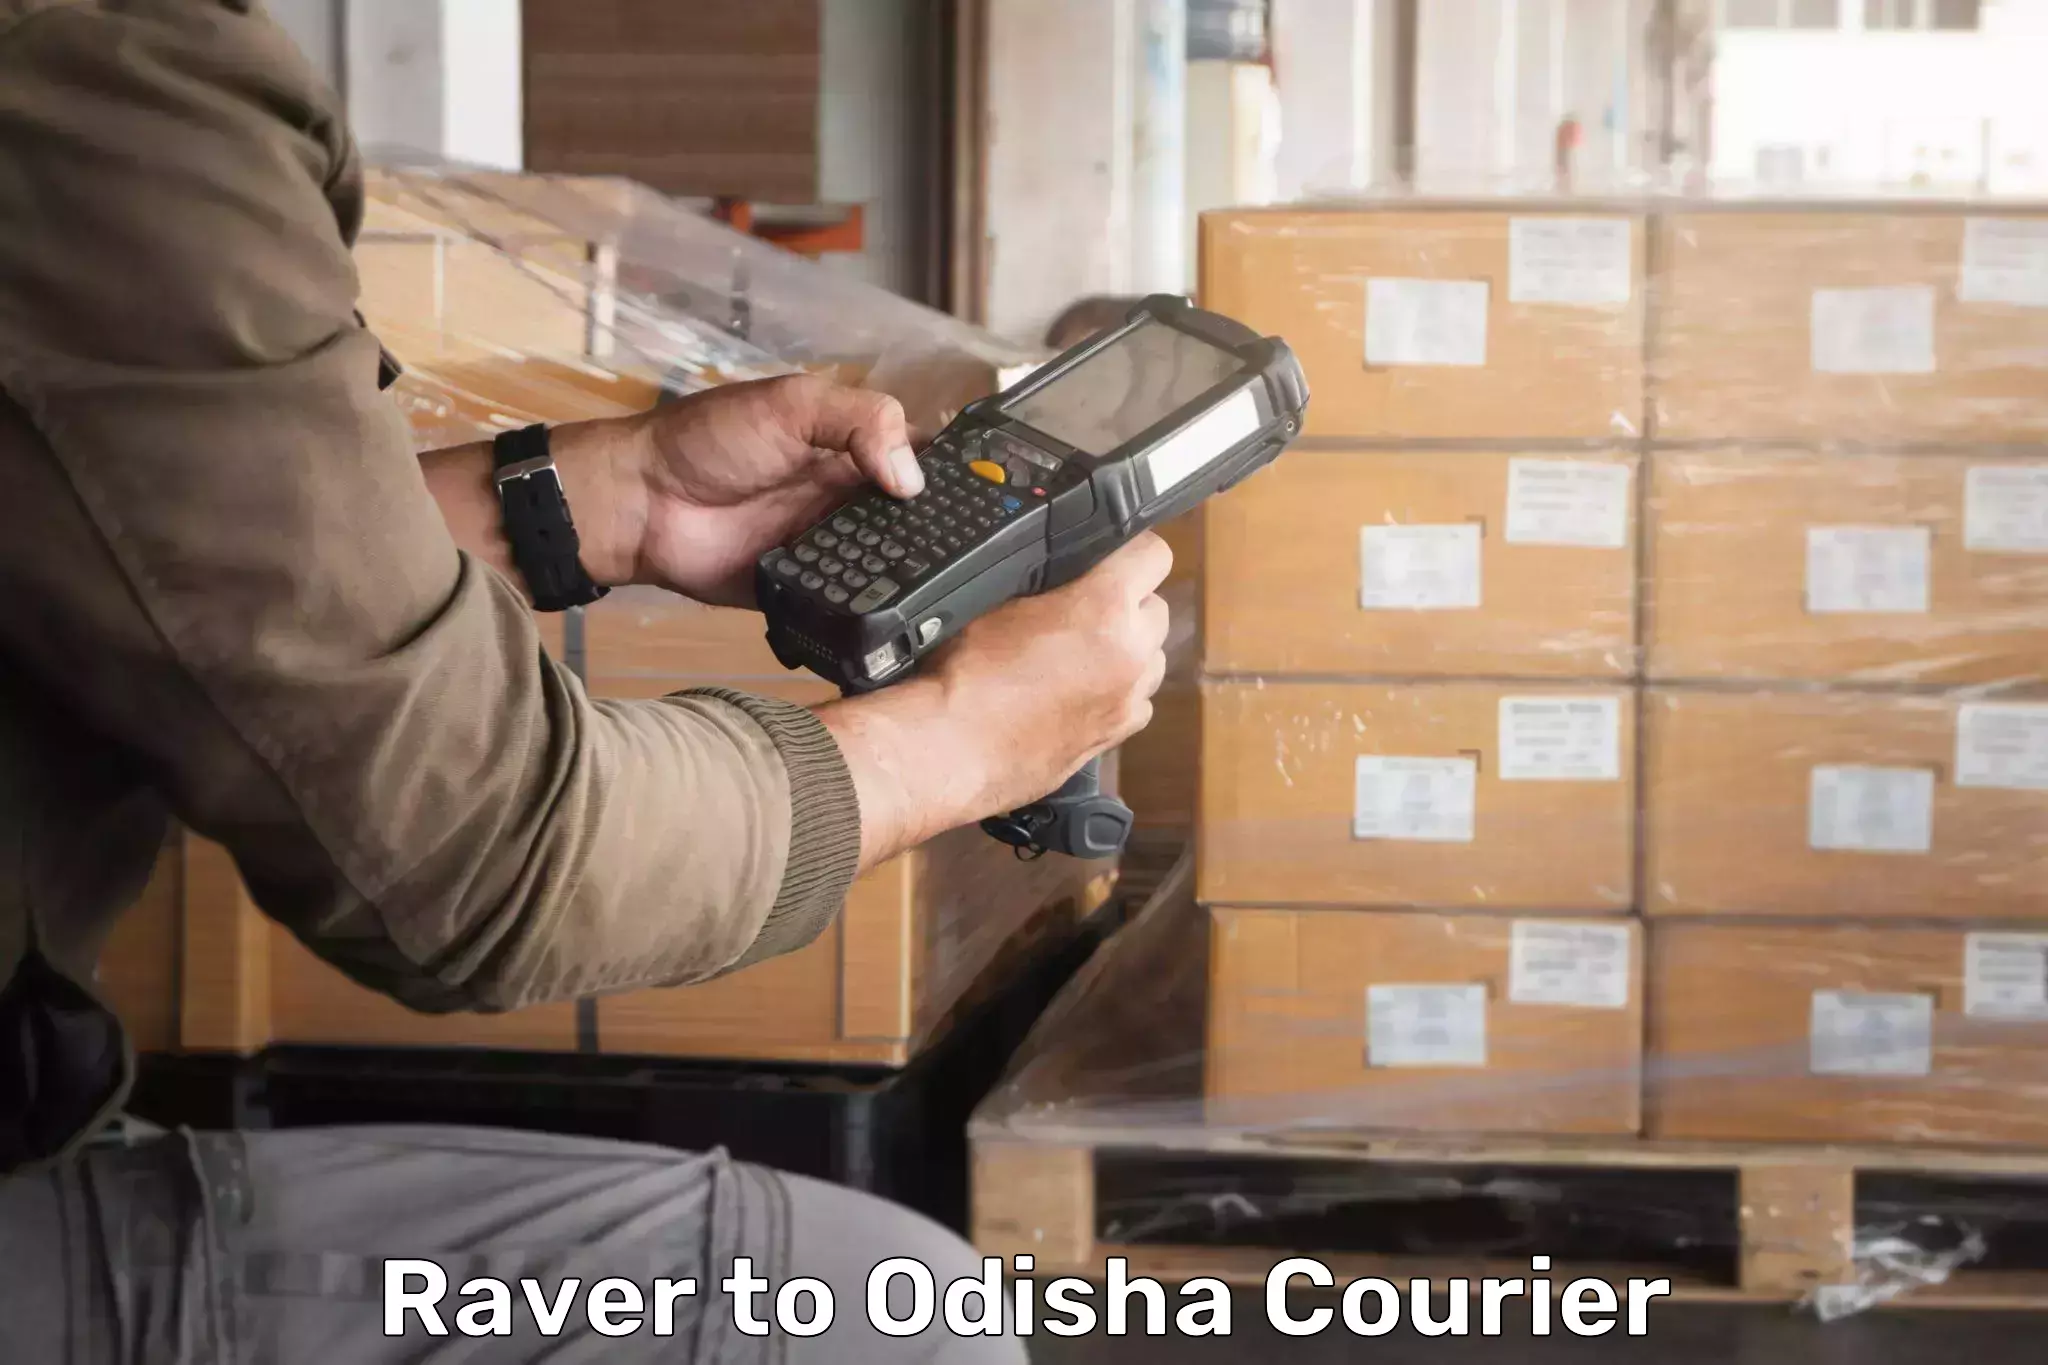 Efficient order fulfillment Raver to Duburi